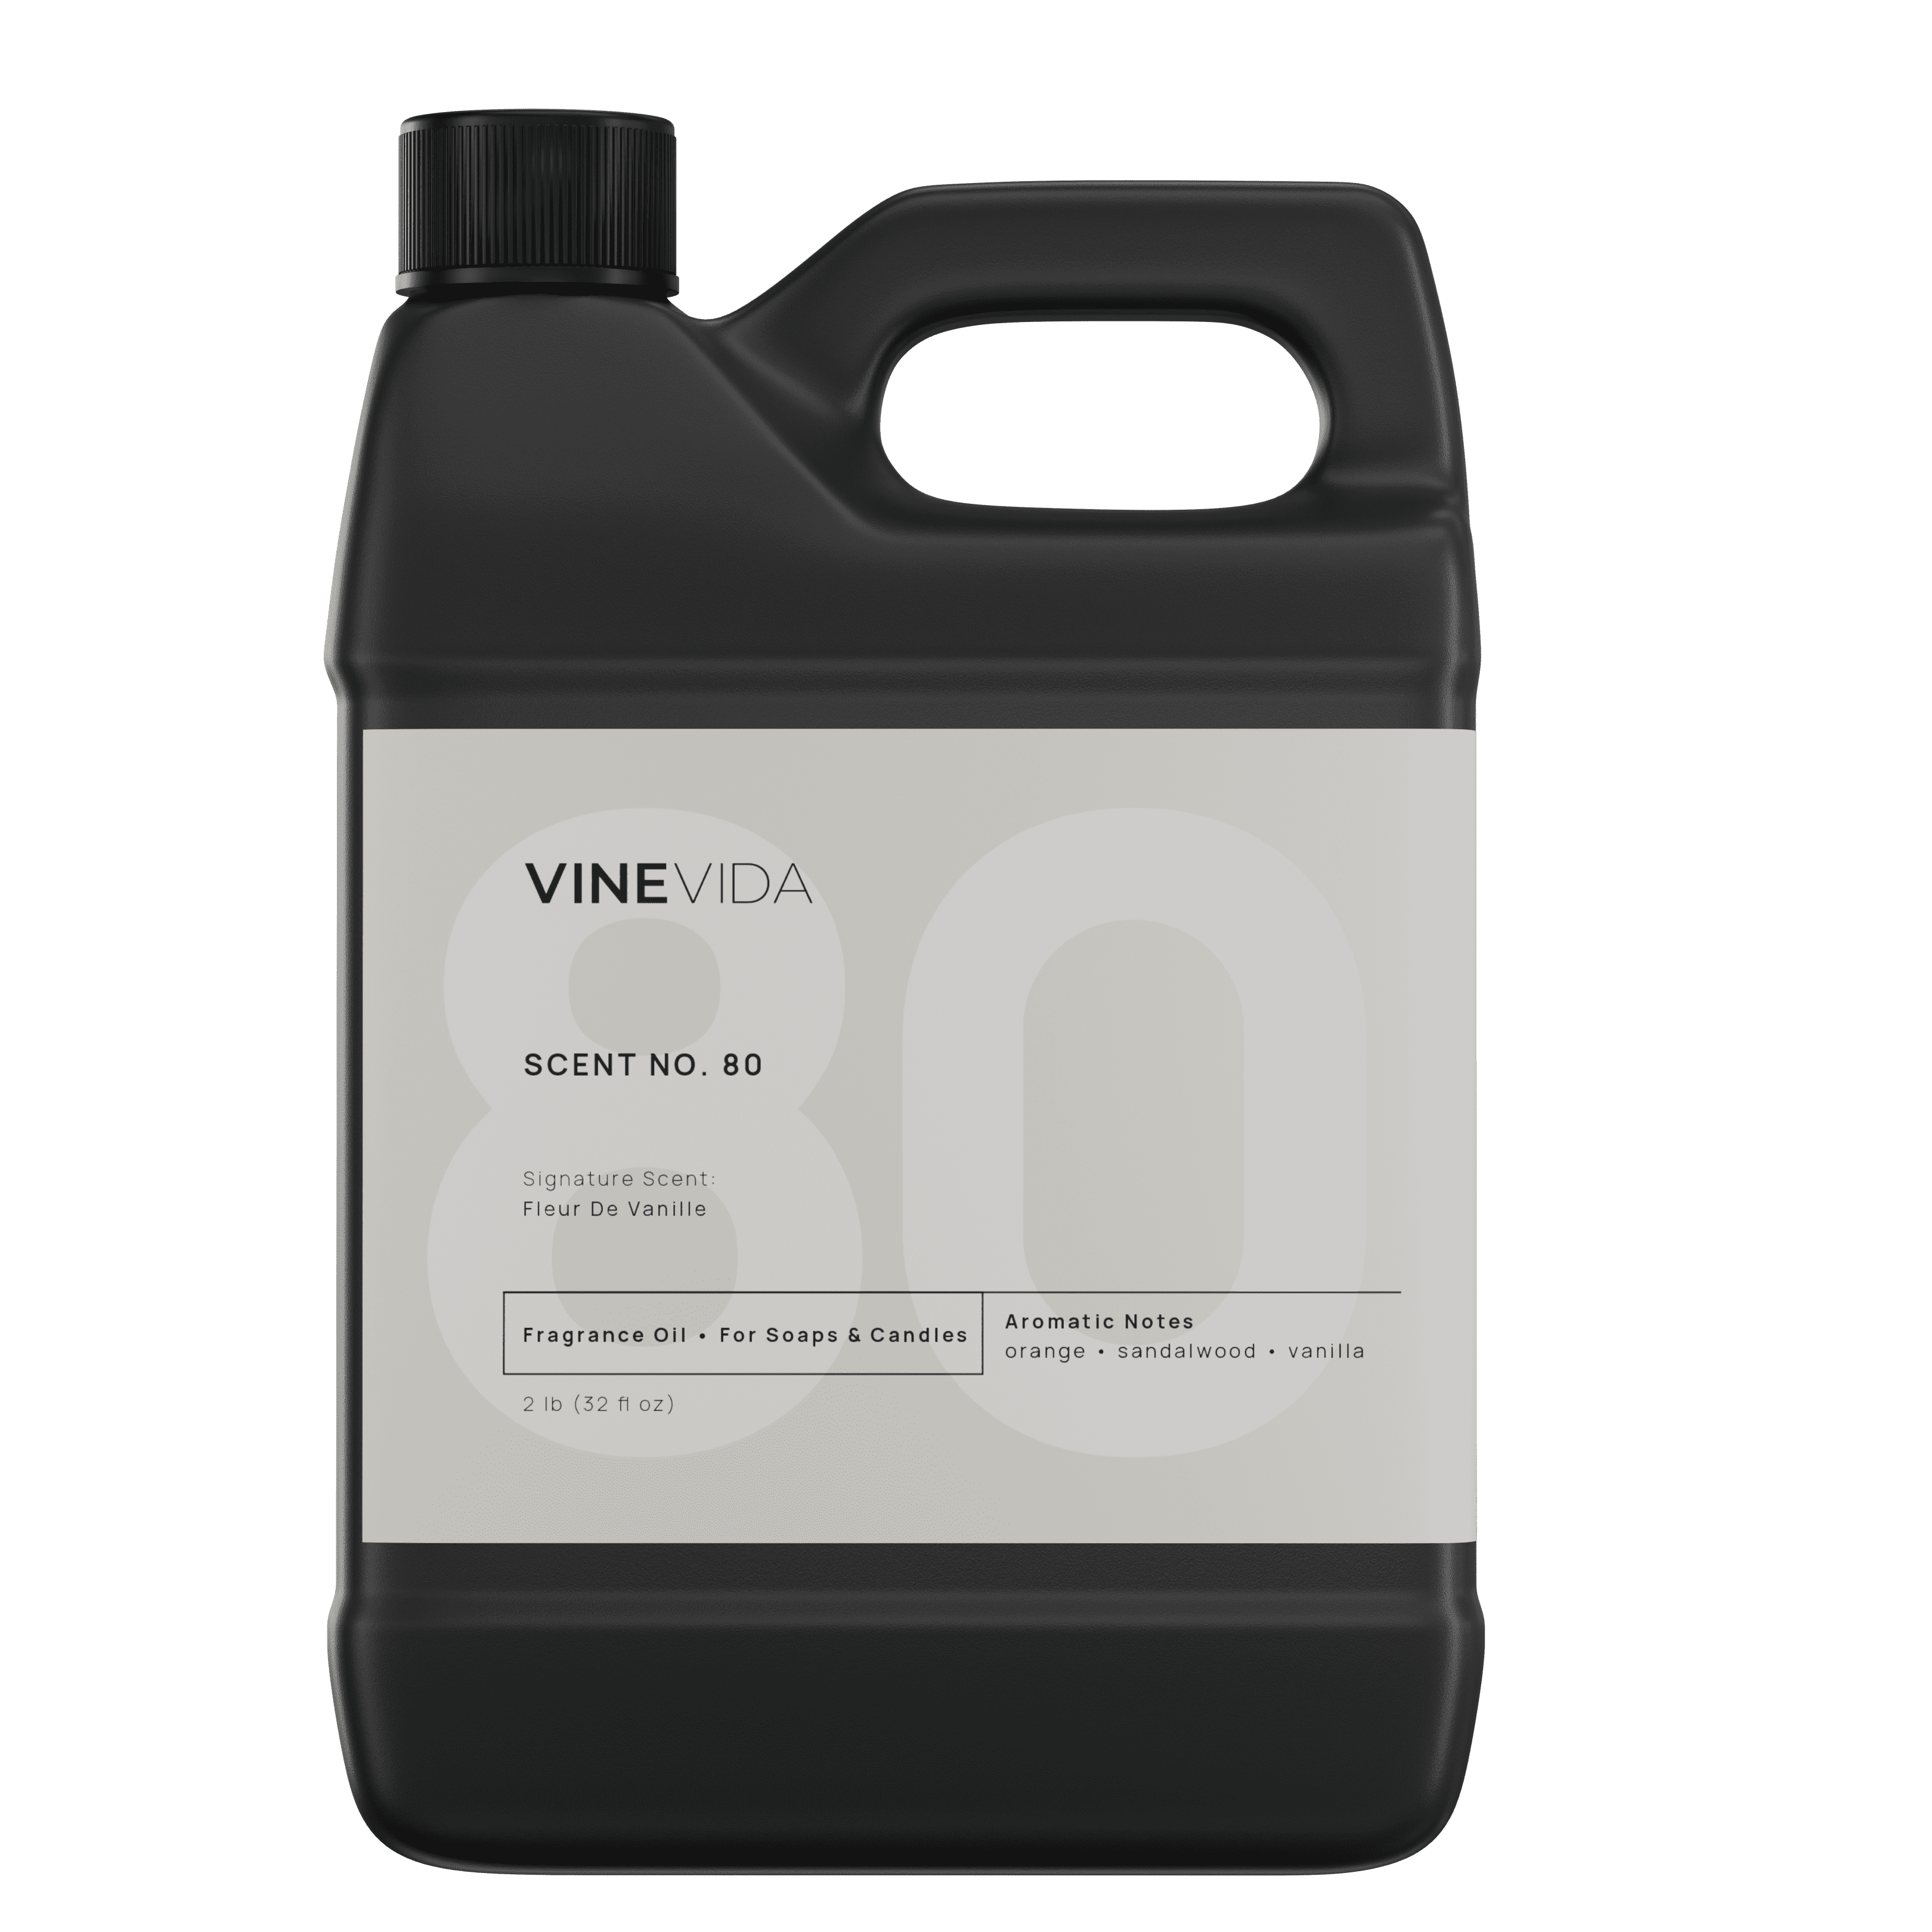 NO. 80 Fragrance Oil for Soaps & Candles - Fleur De Vanille